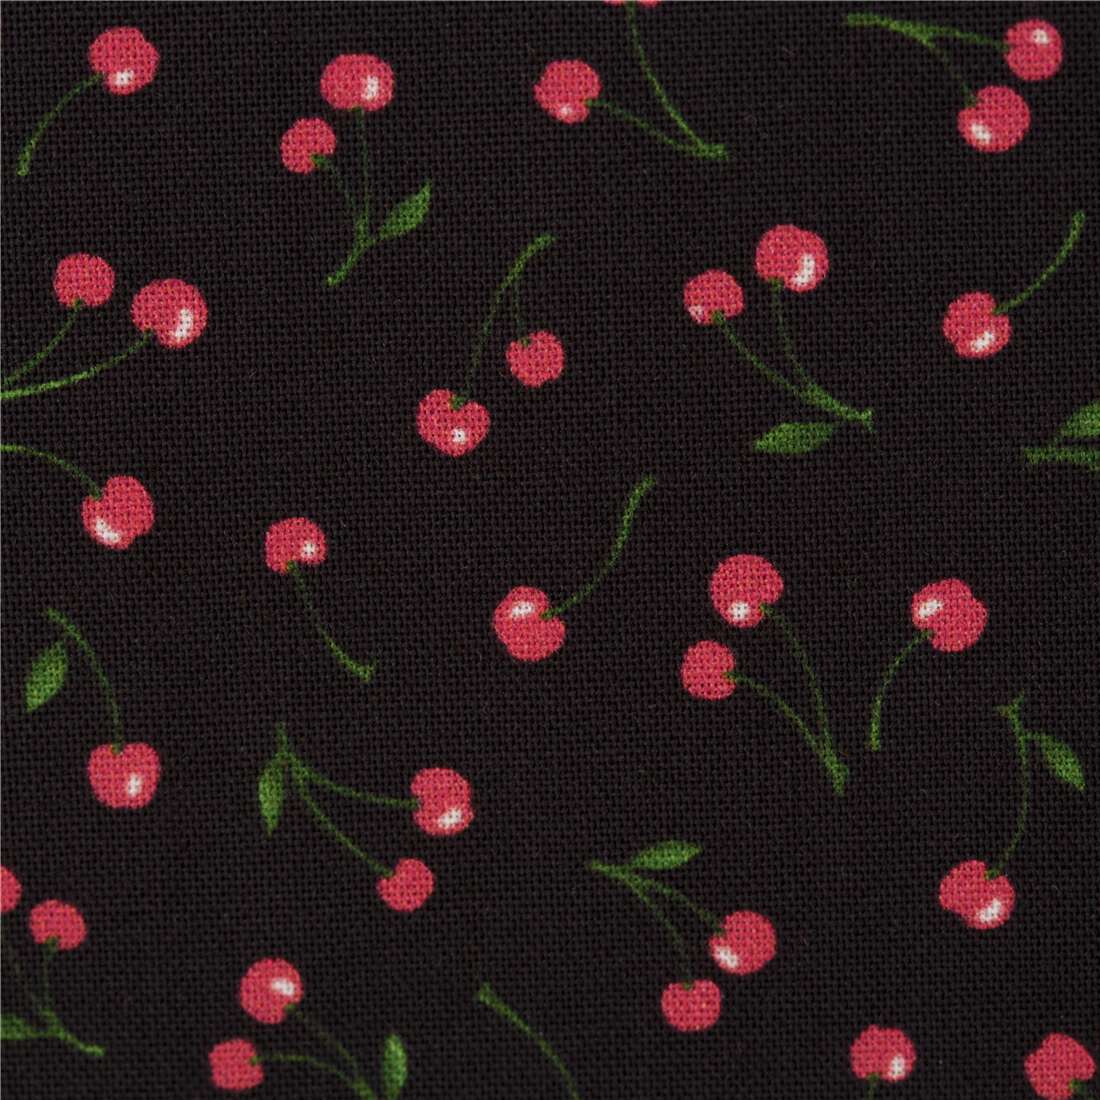 Retro Fruity Cherries Fabric by Michael Miller - modeS4u